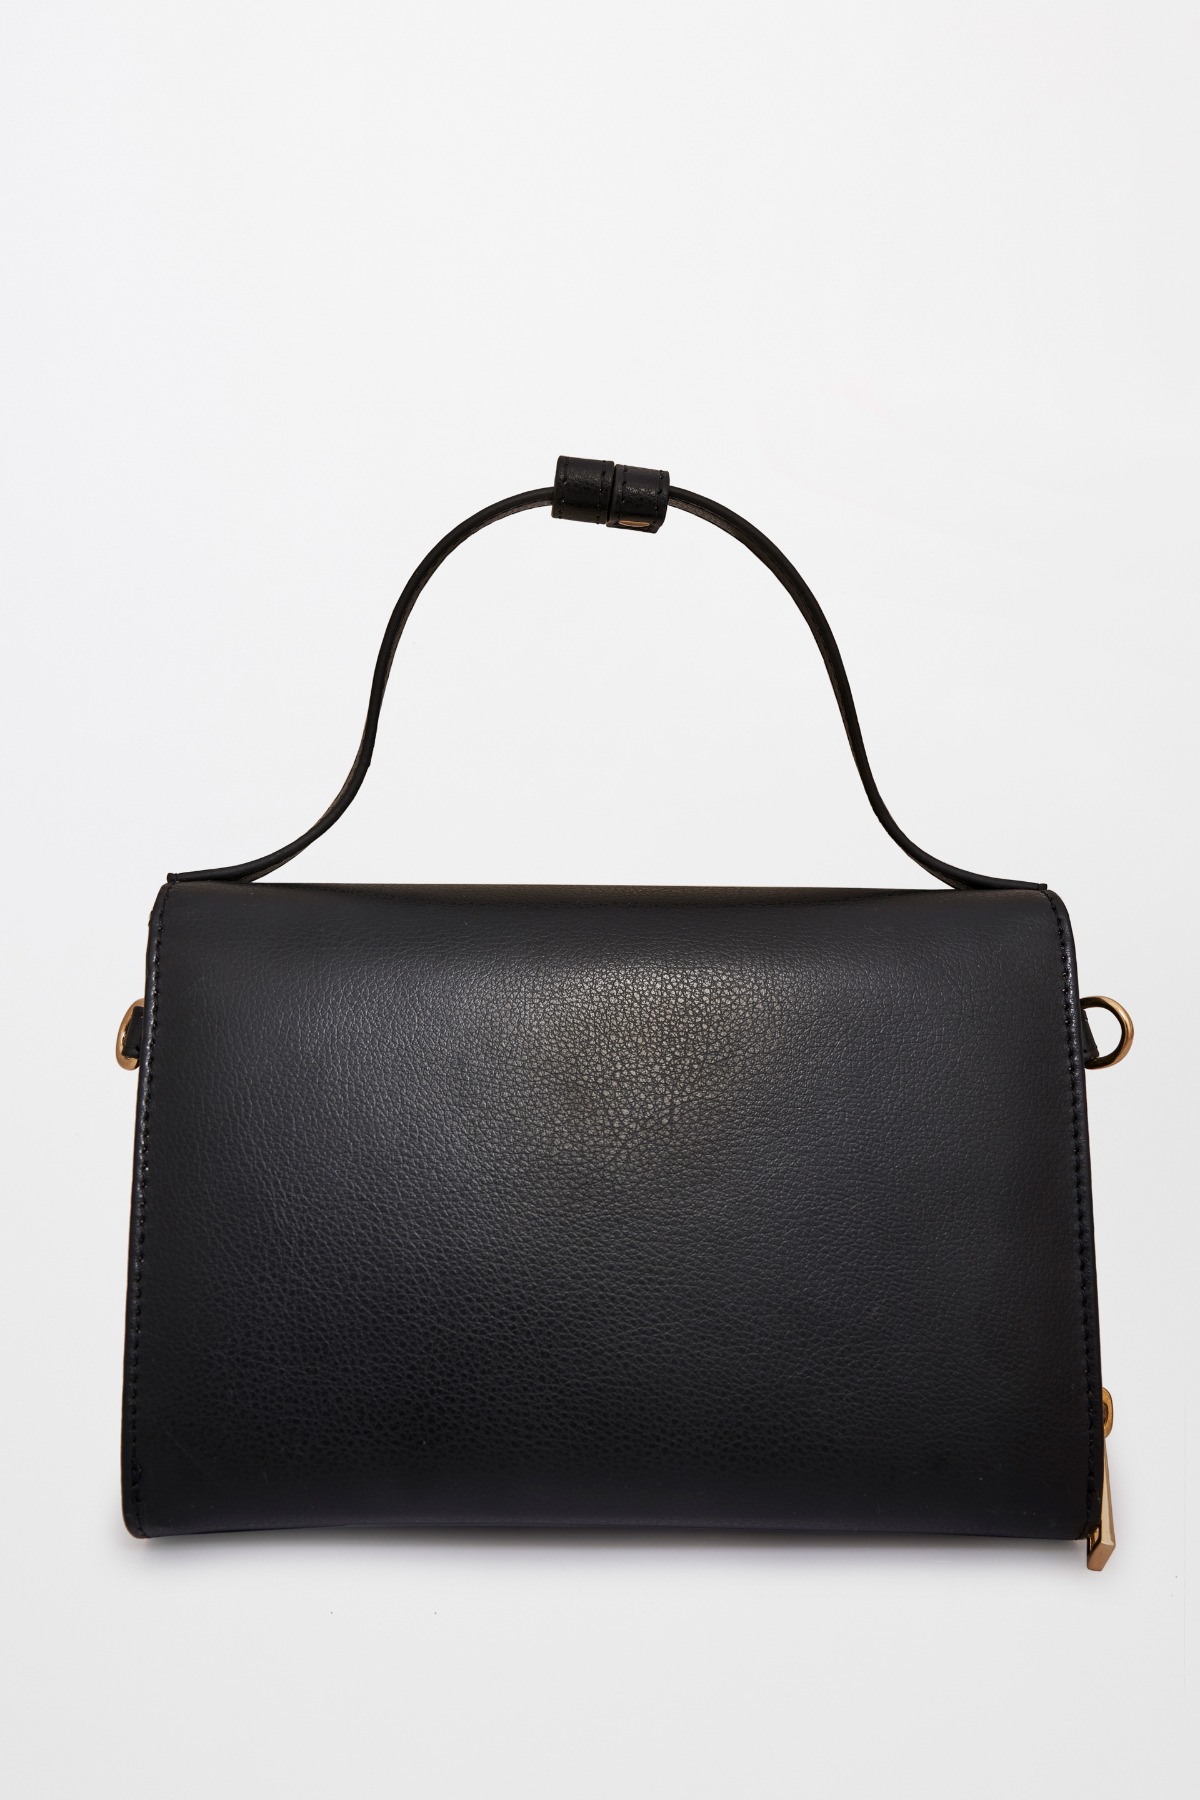 4 - Black Handbag, image 1